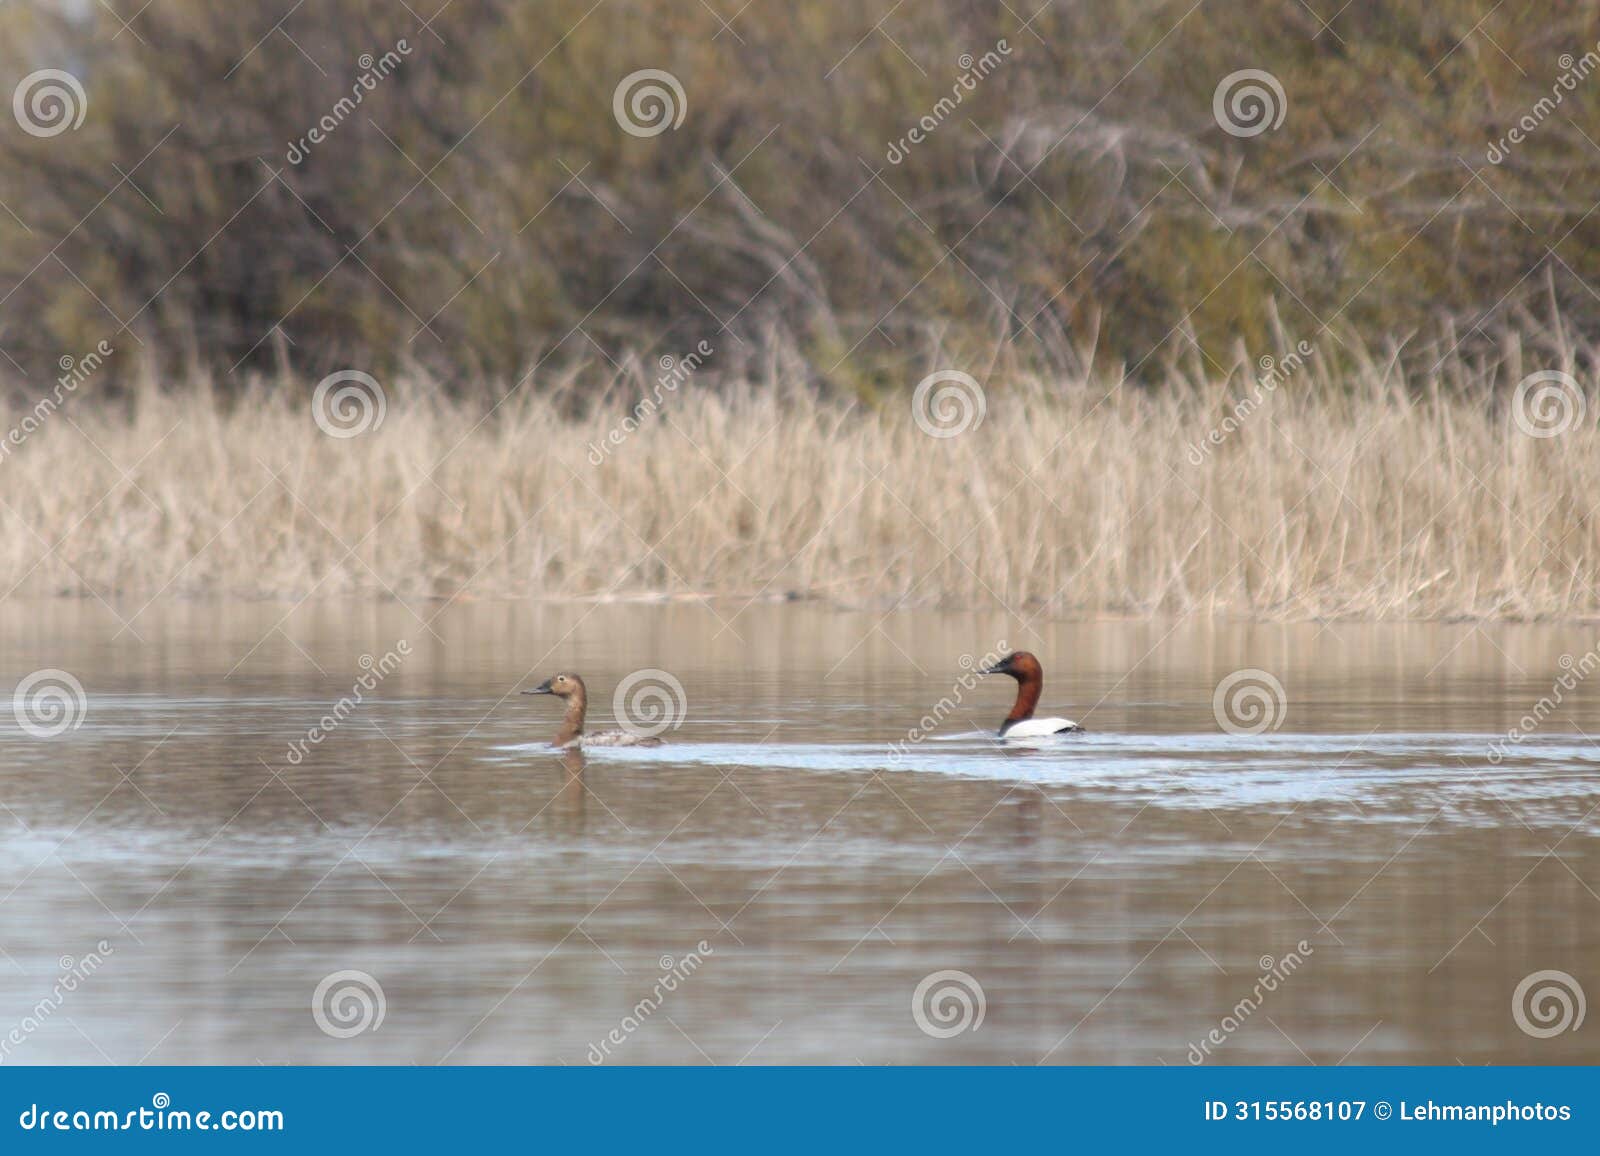 redhead ducks pair in the lake